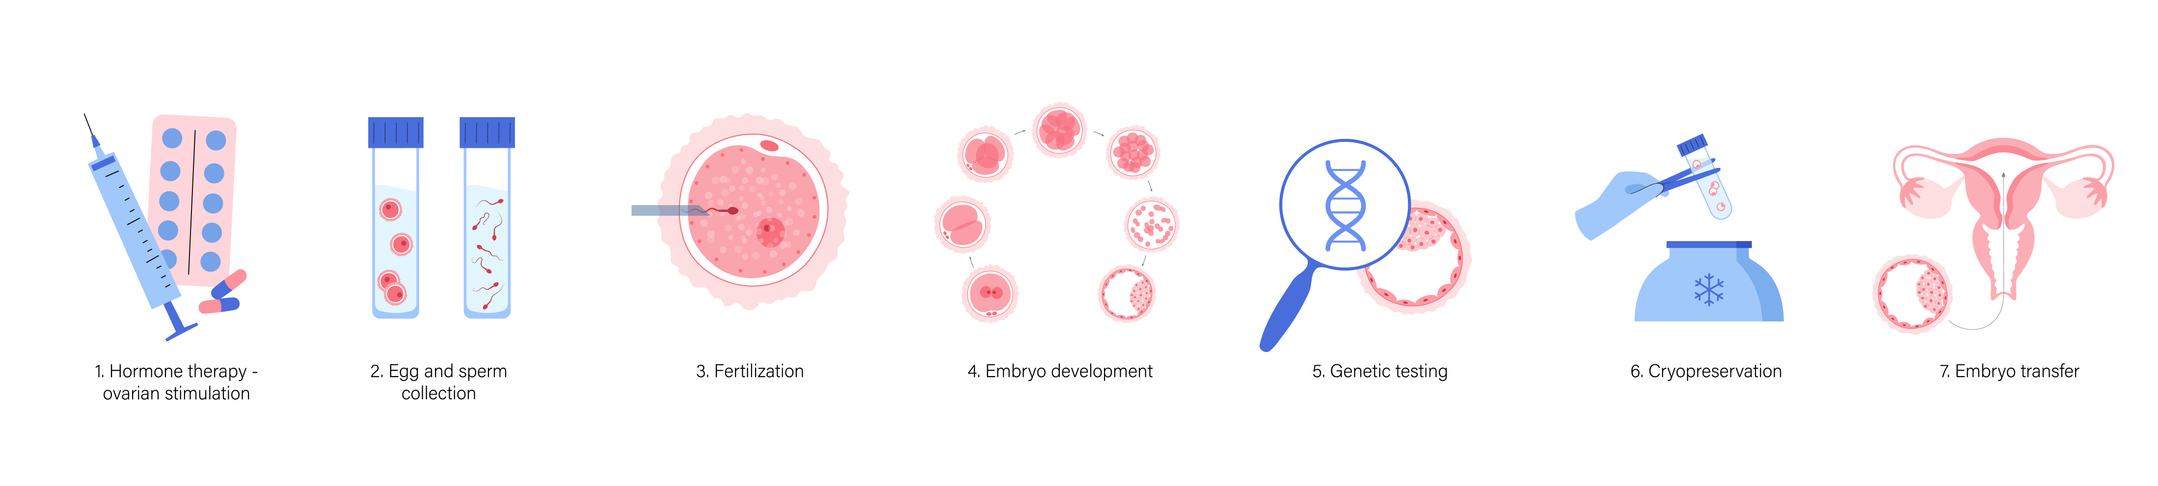 In vitro fertilization process. Embryo development in IVF stages.